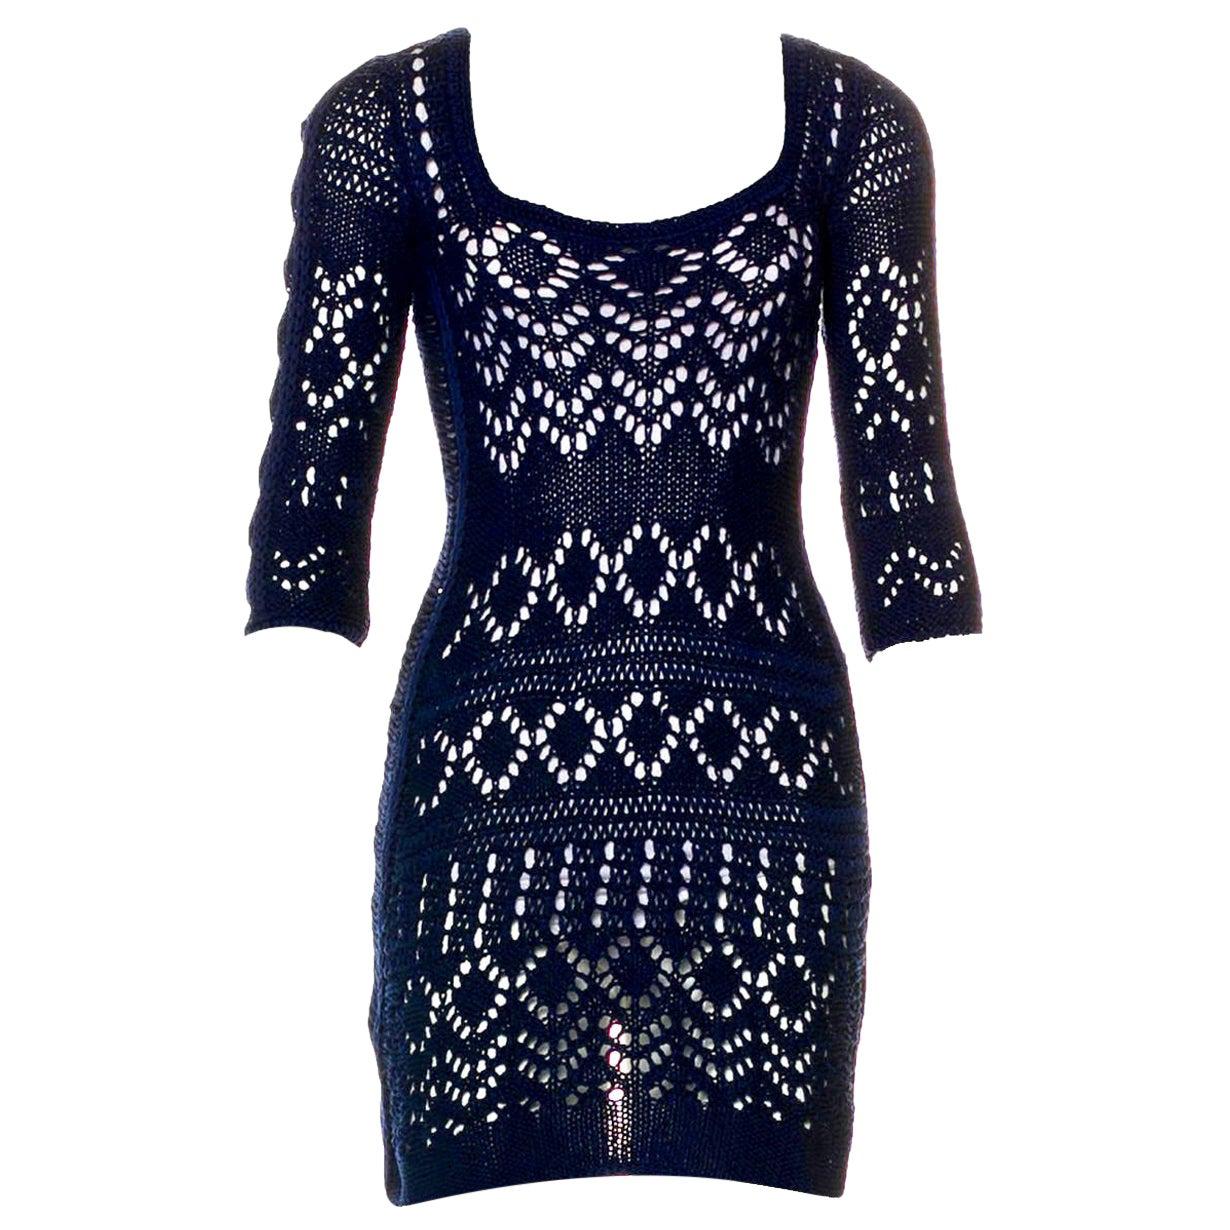 NEW Emilio Pucci Navy Blue Crochet Knit Mini Dress with Cutout Details